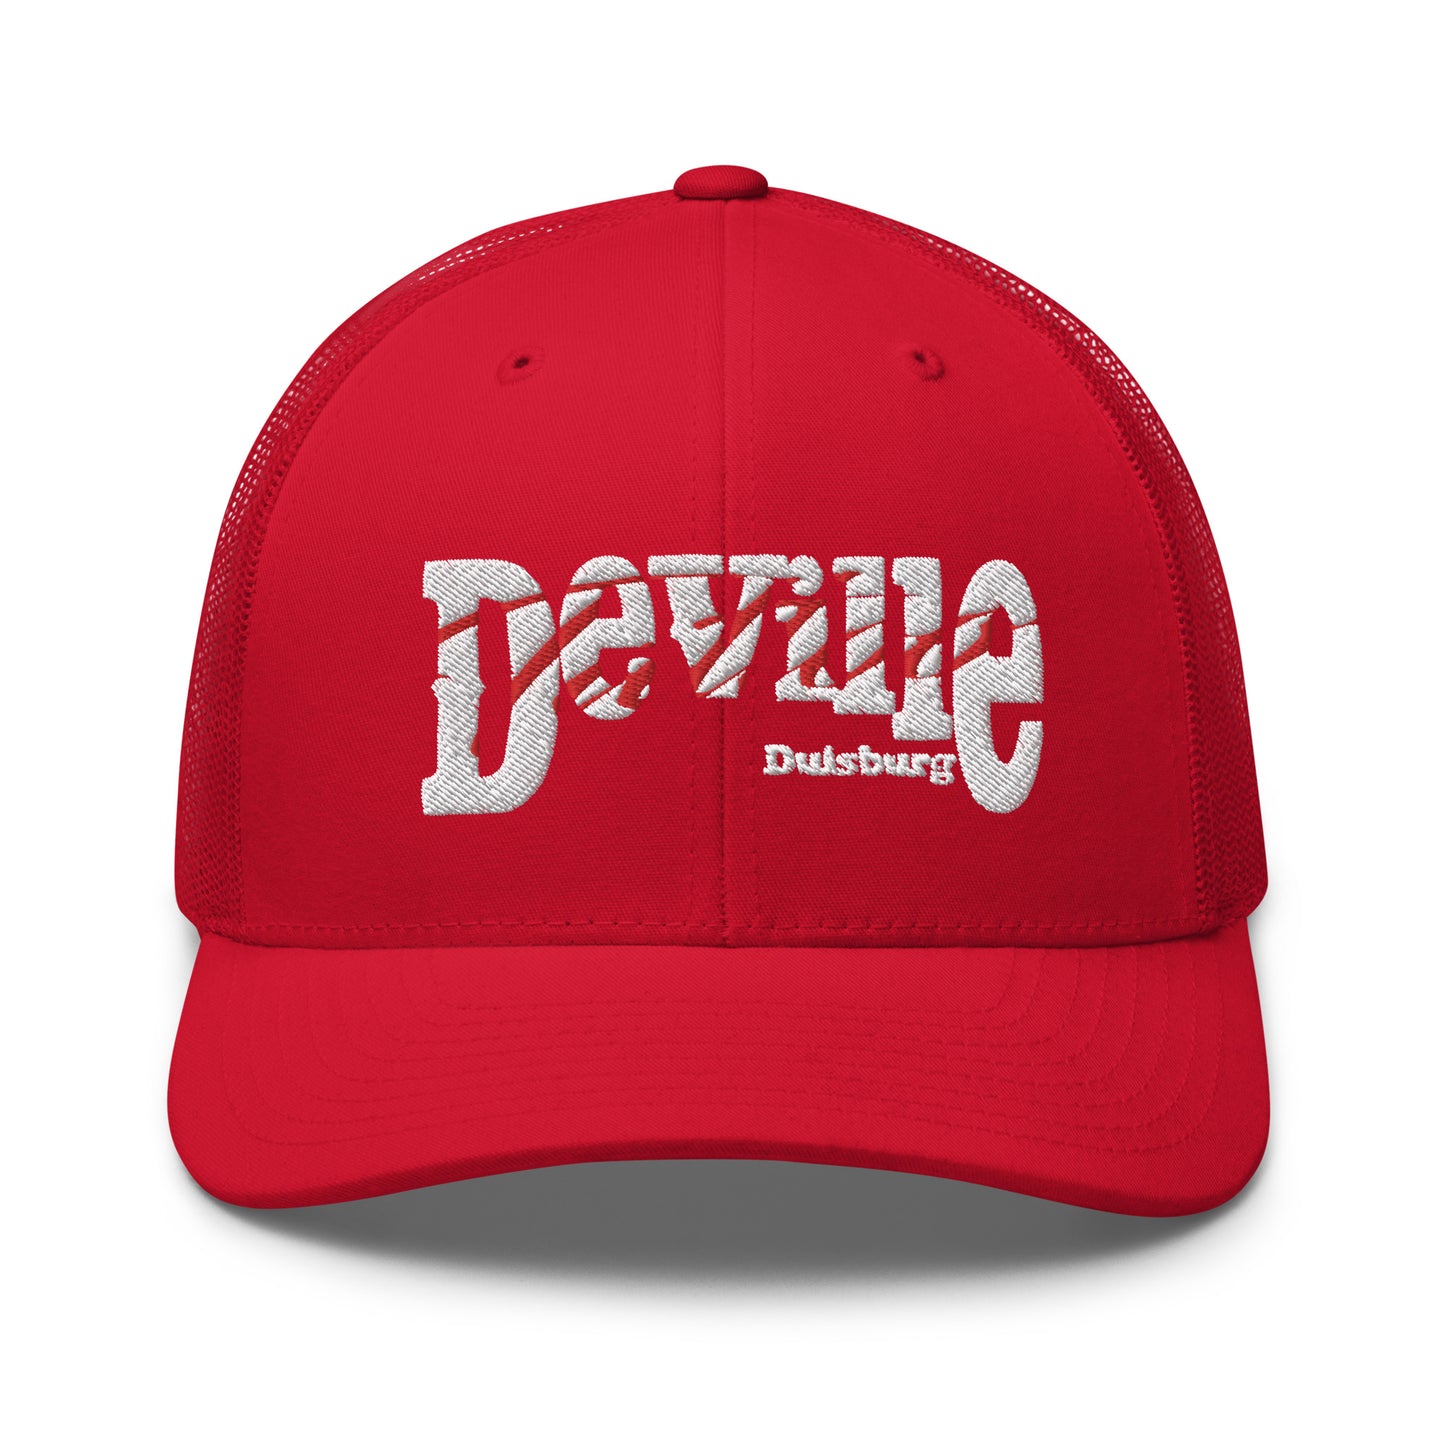 DeVille Trucker Cap white/red